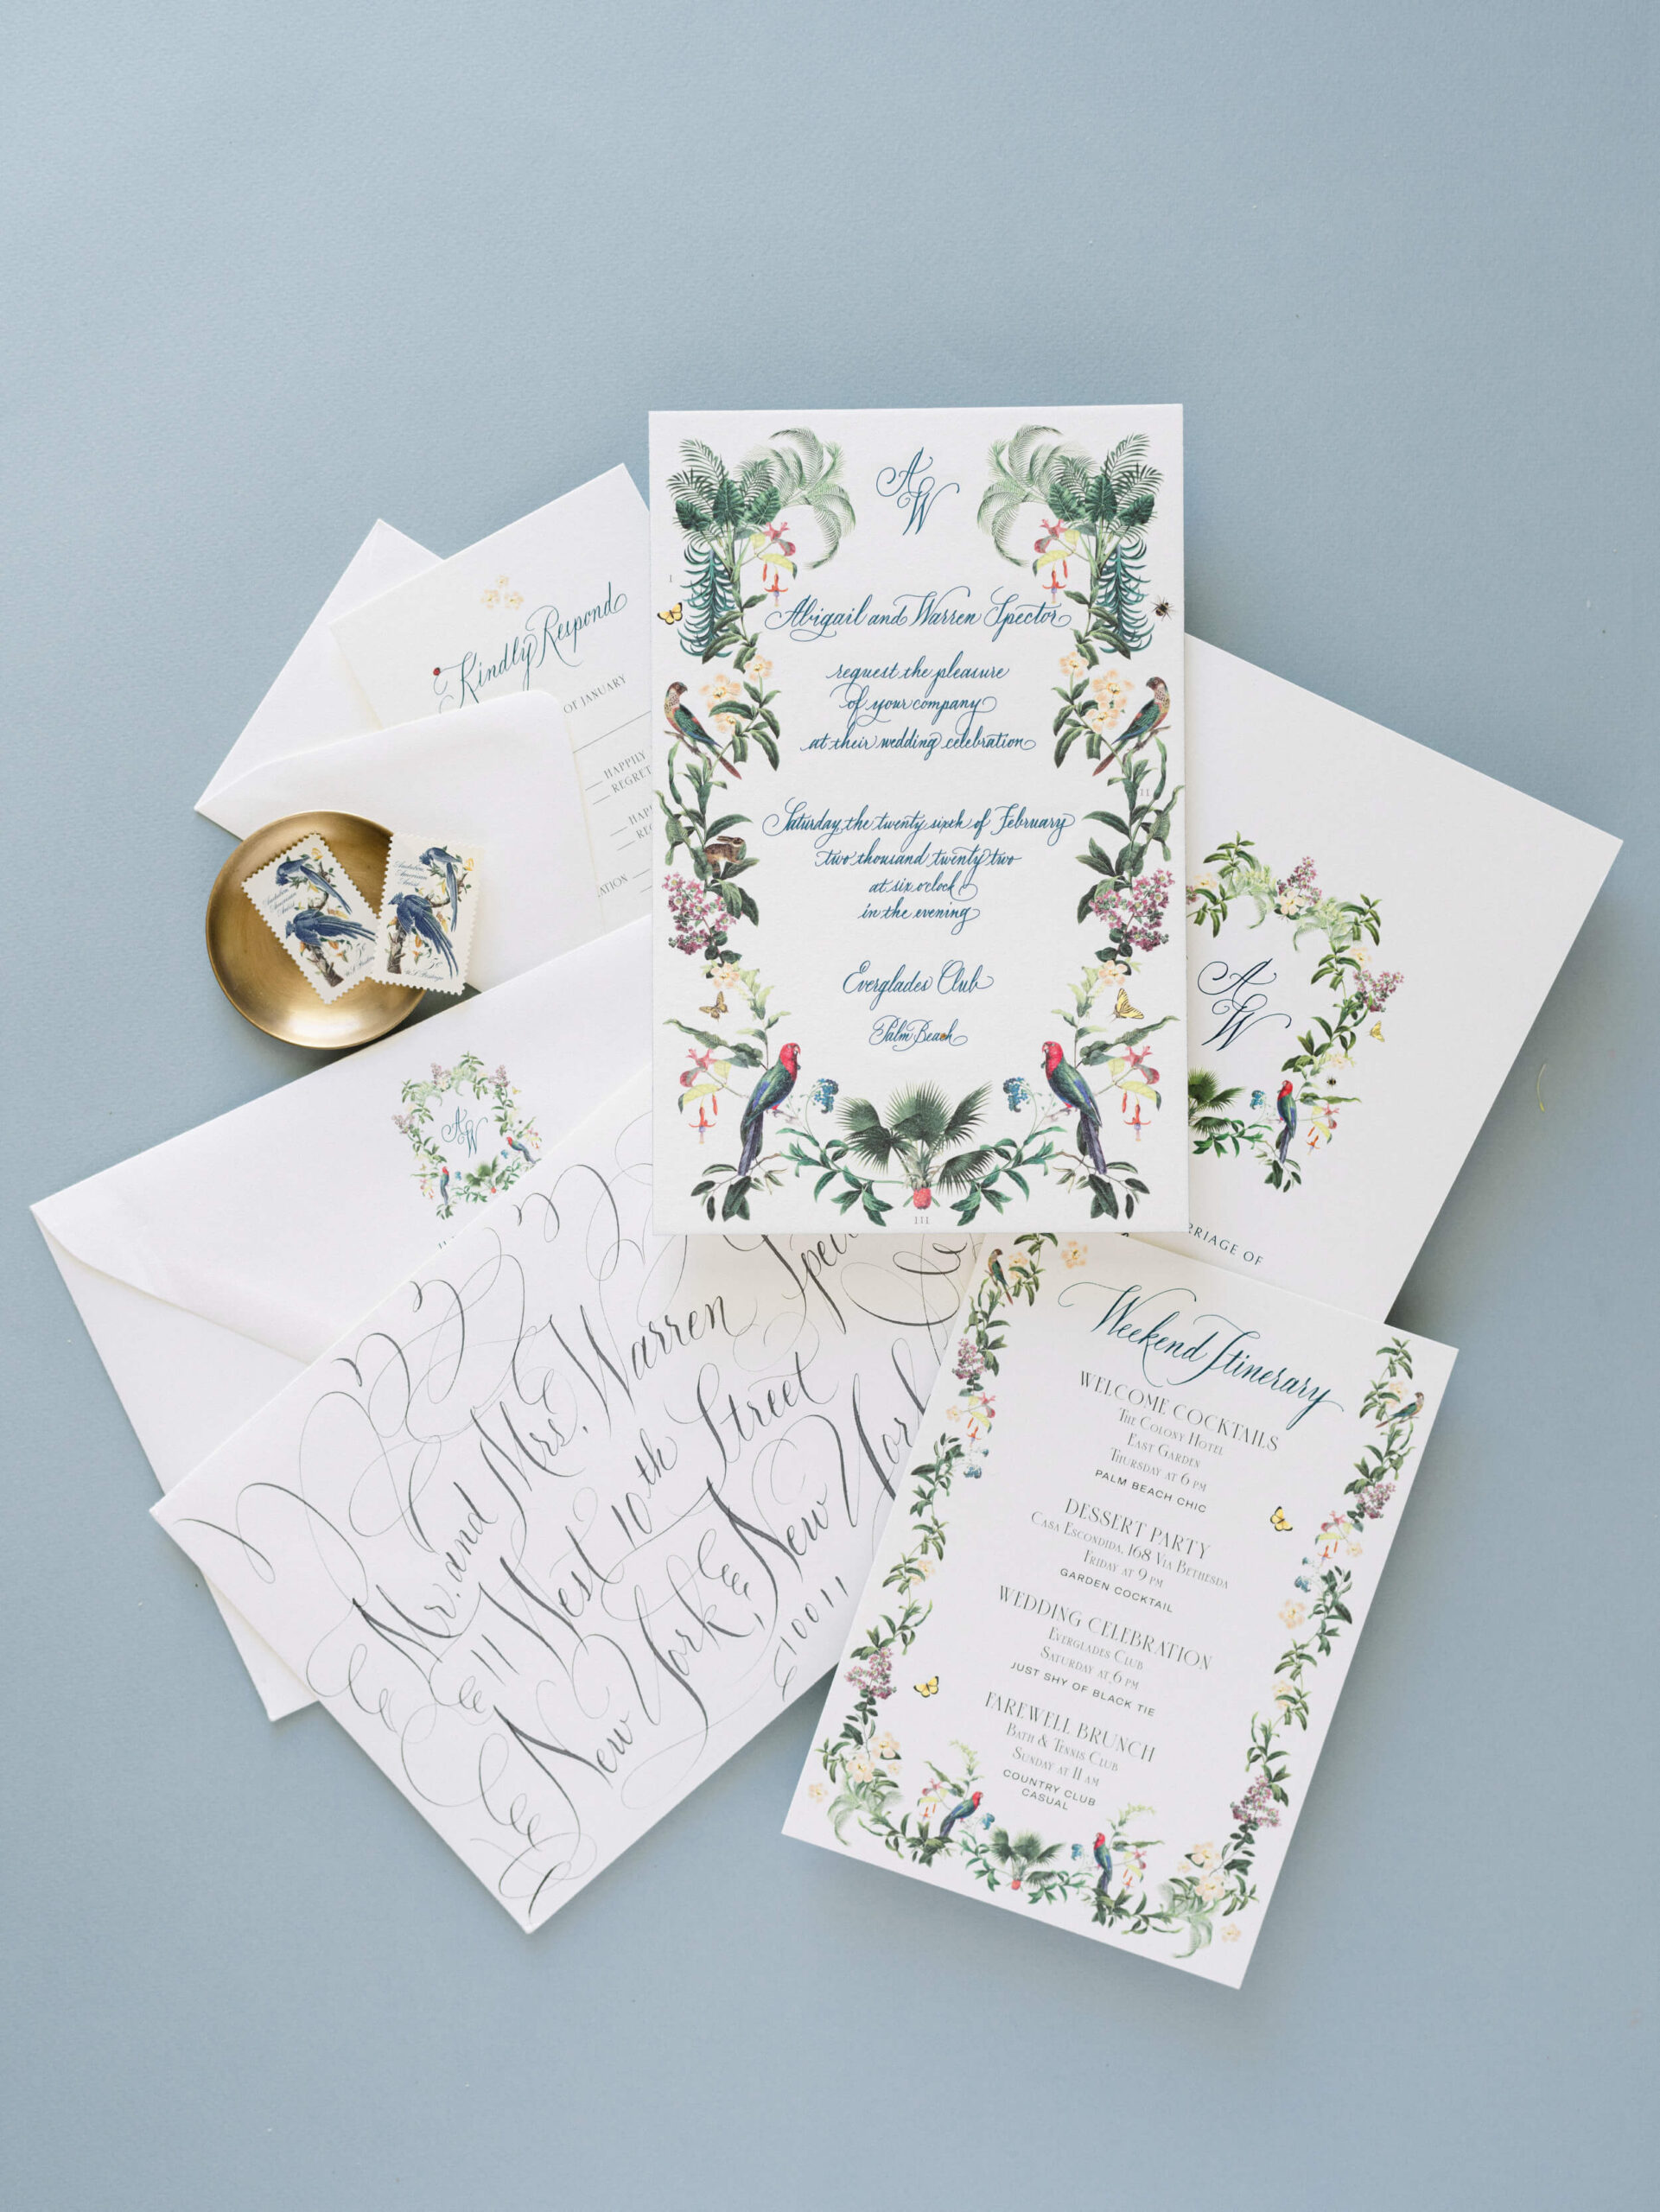 Abigail and Warren's tropical wedding invitations